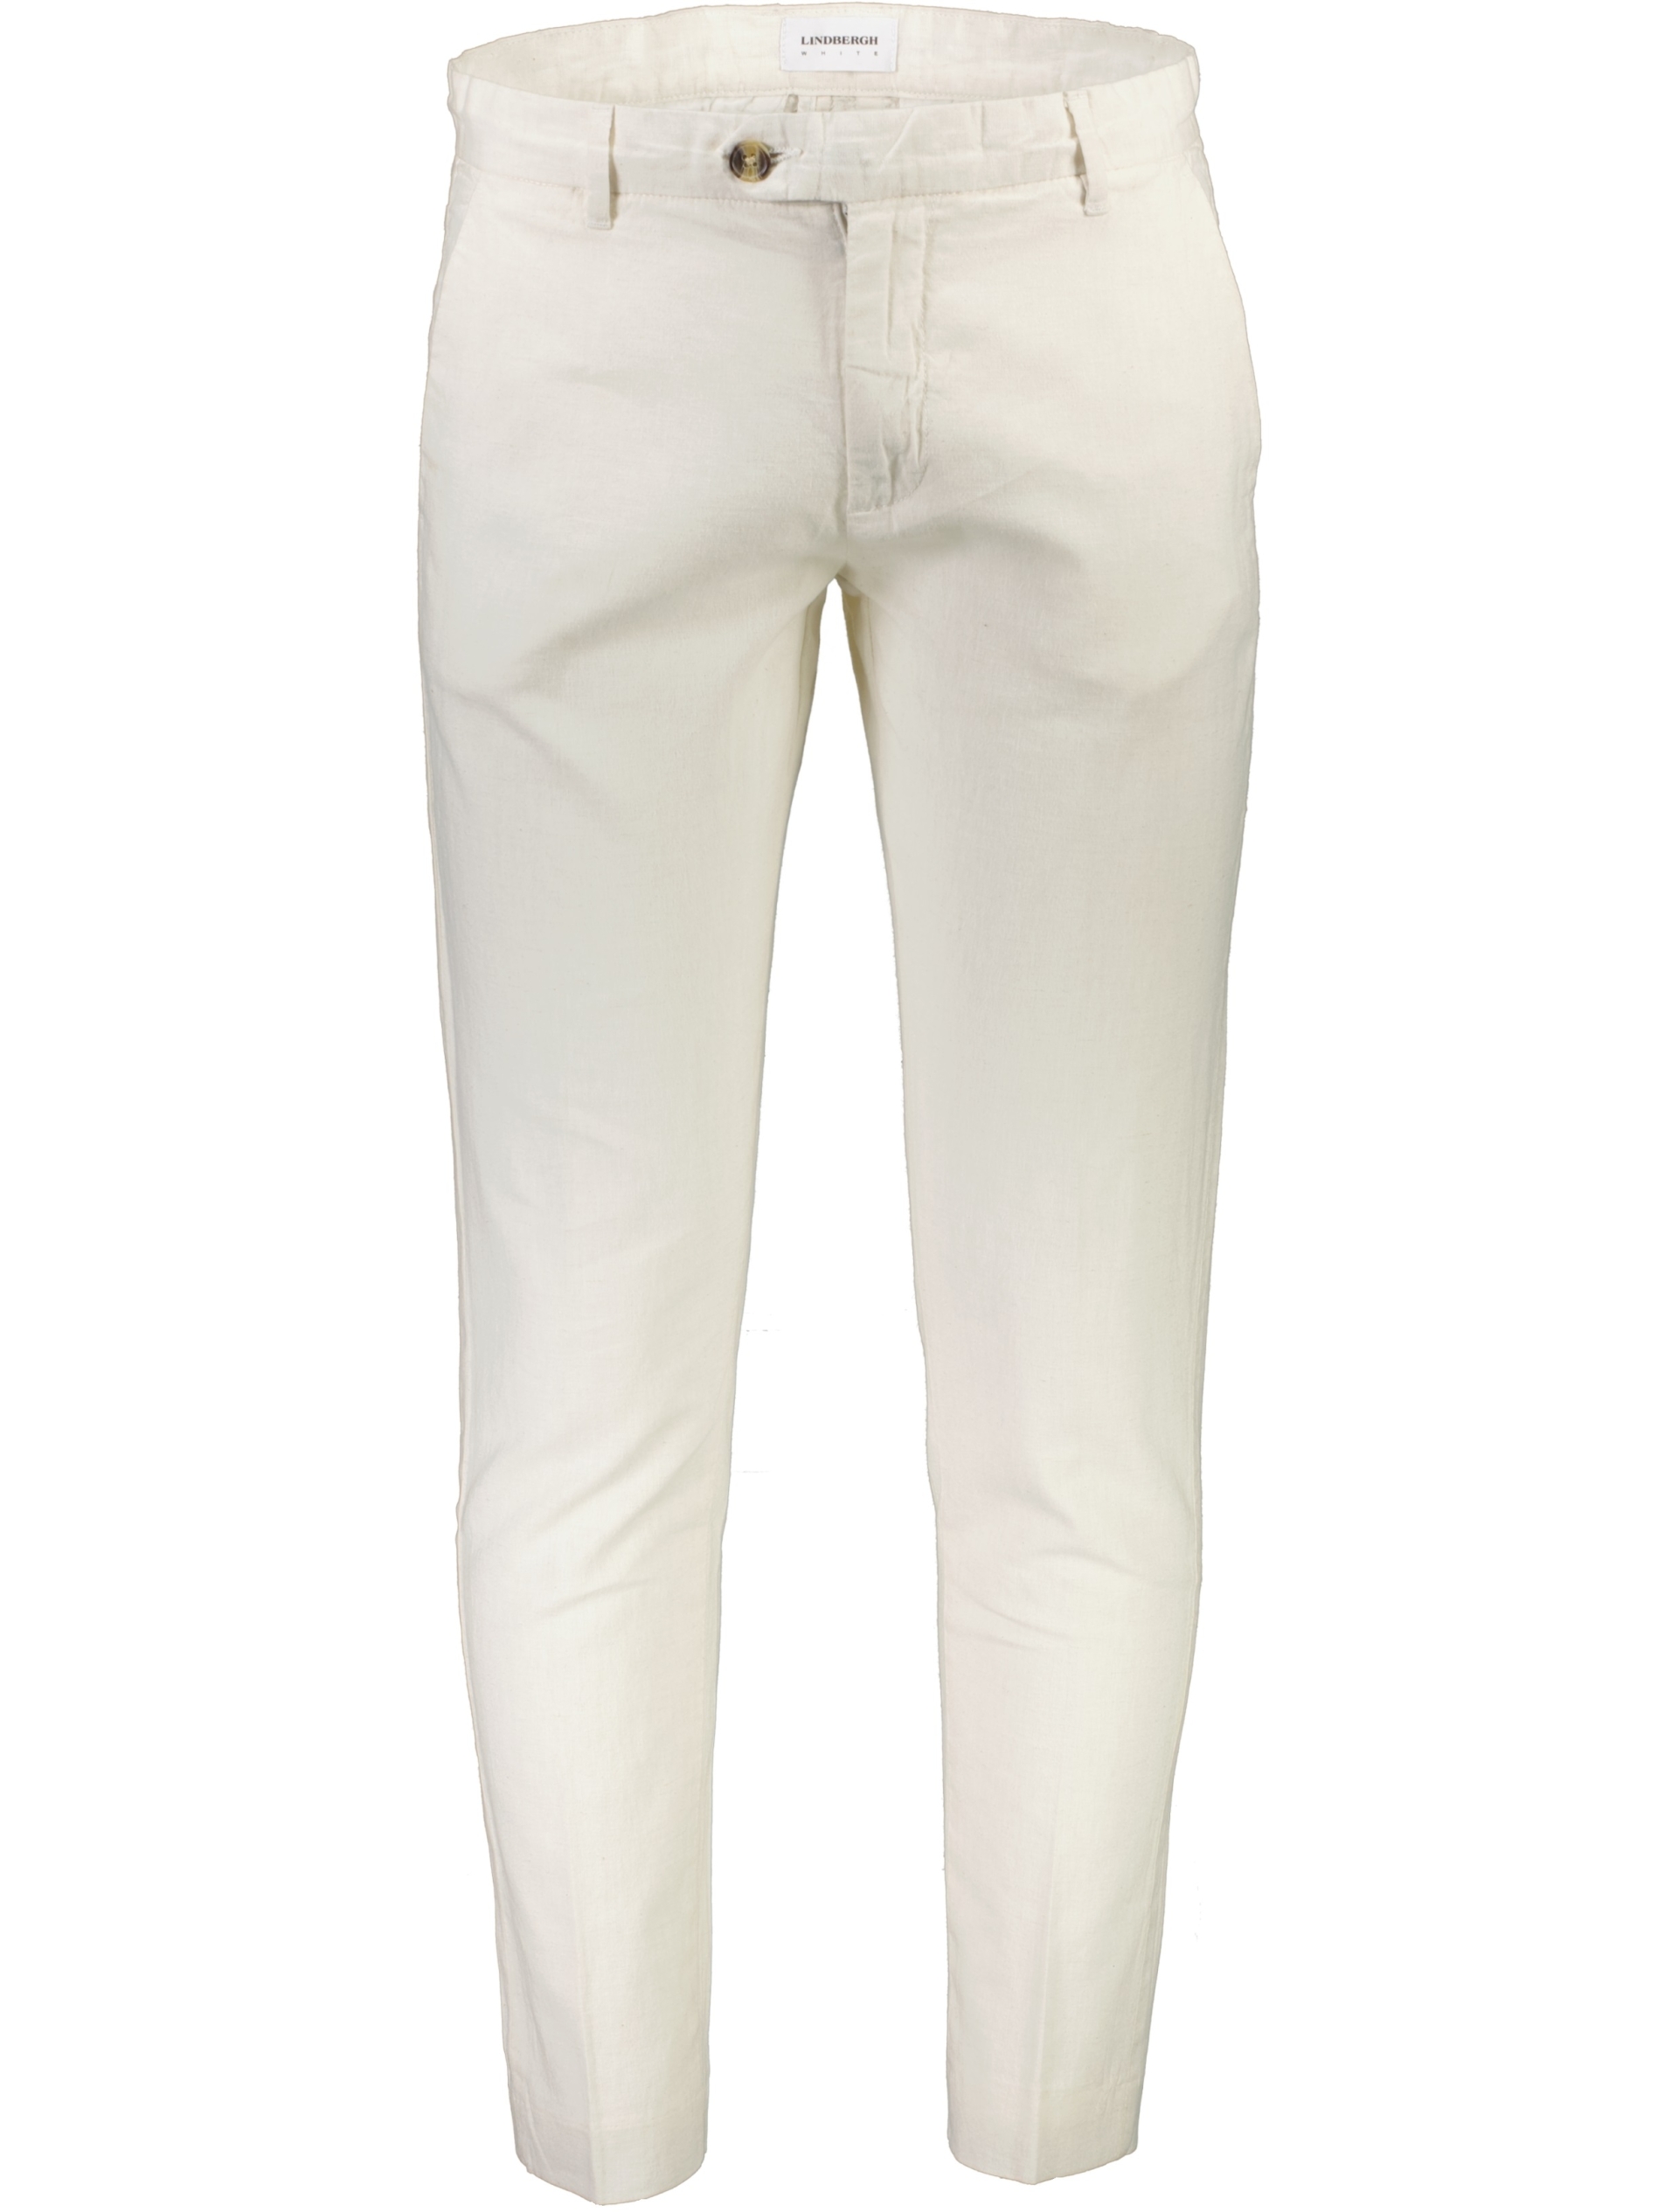 Lindbergh Casual pants white / white